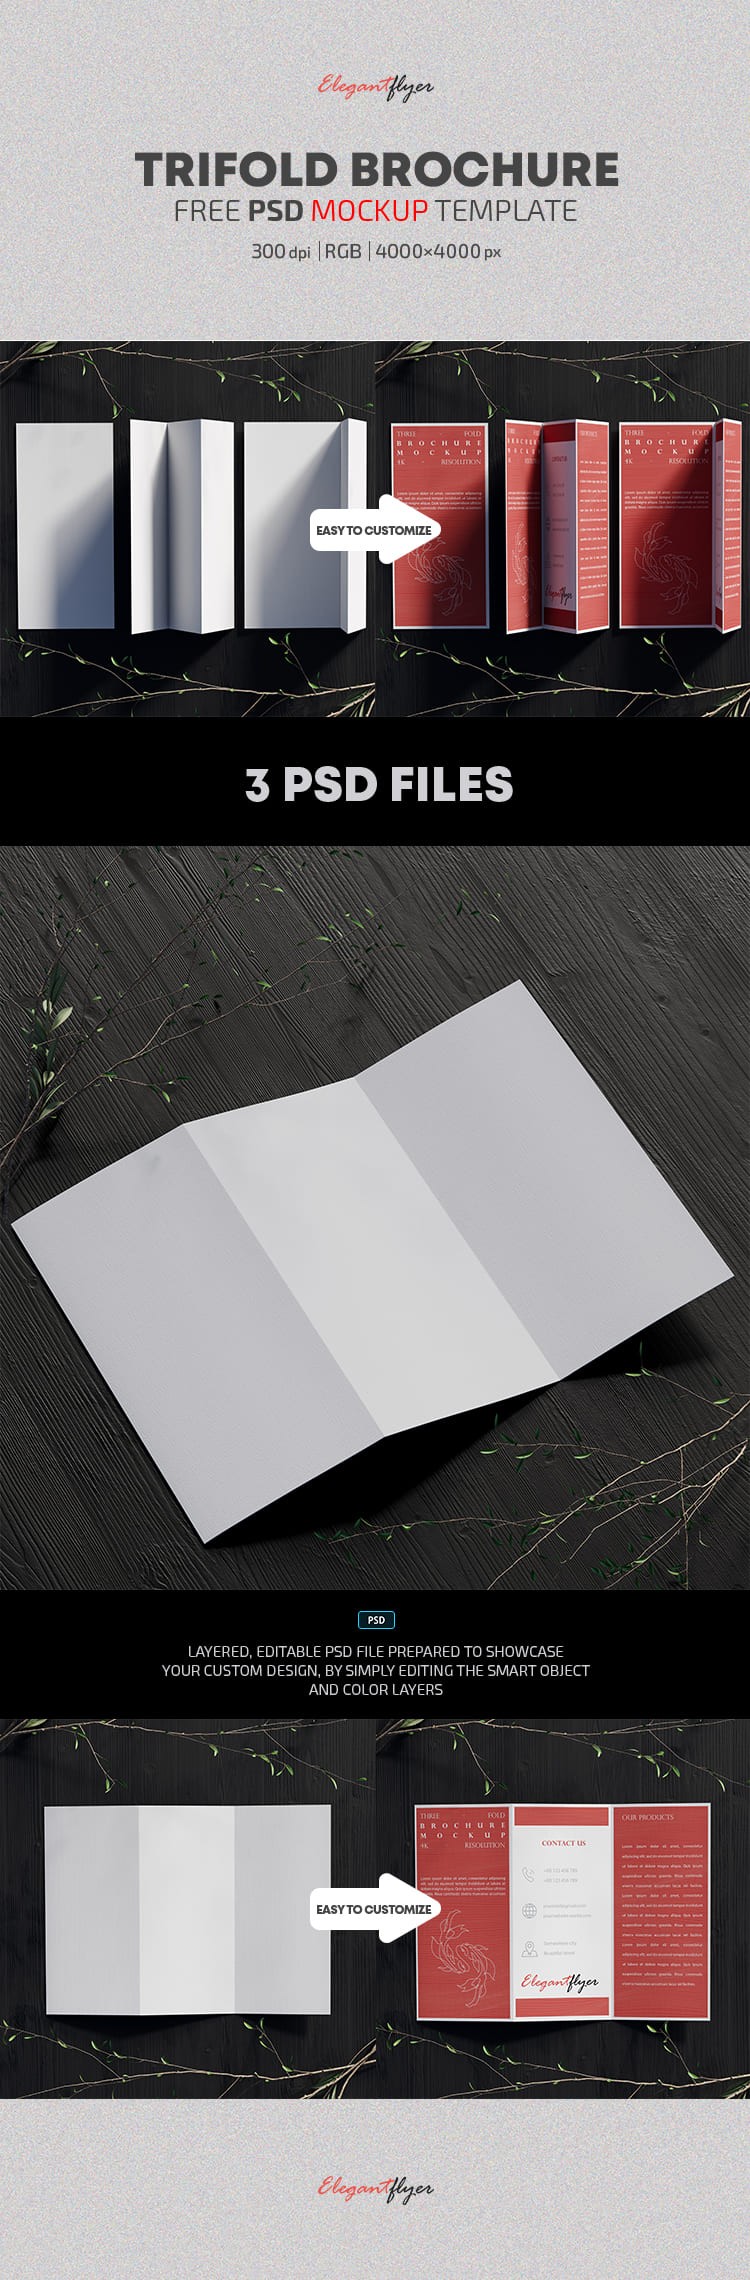 Tri-Fold Brochure Mockup by ElegantFlyer